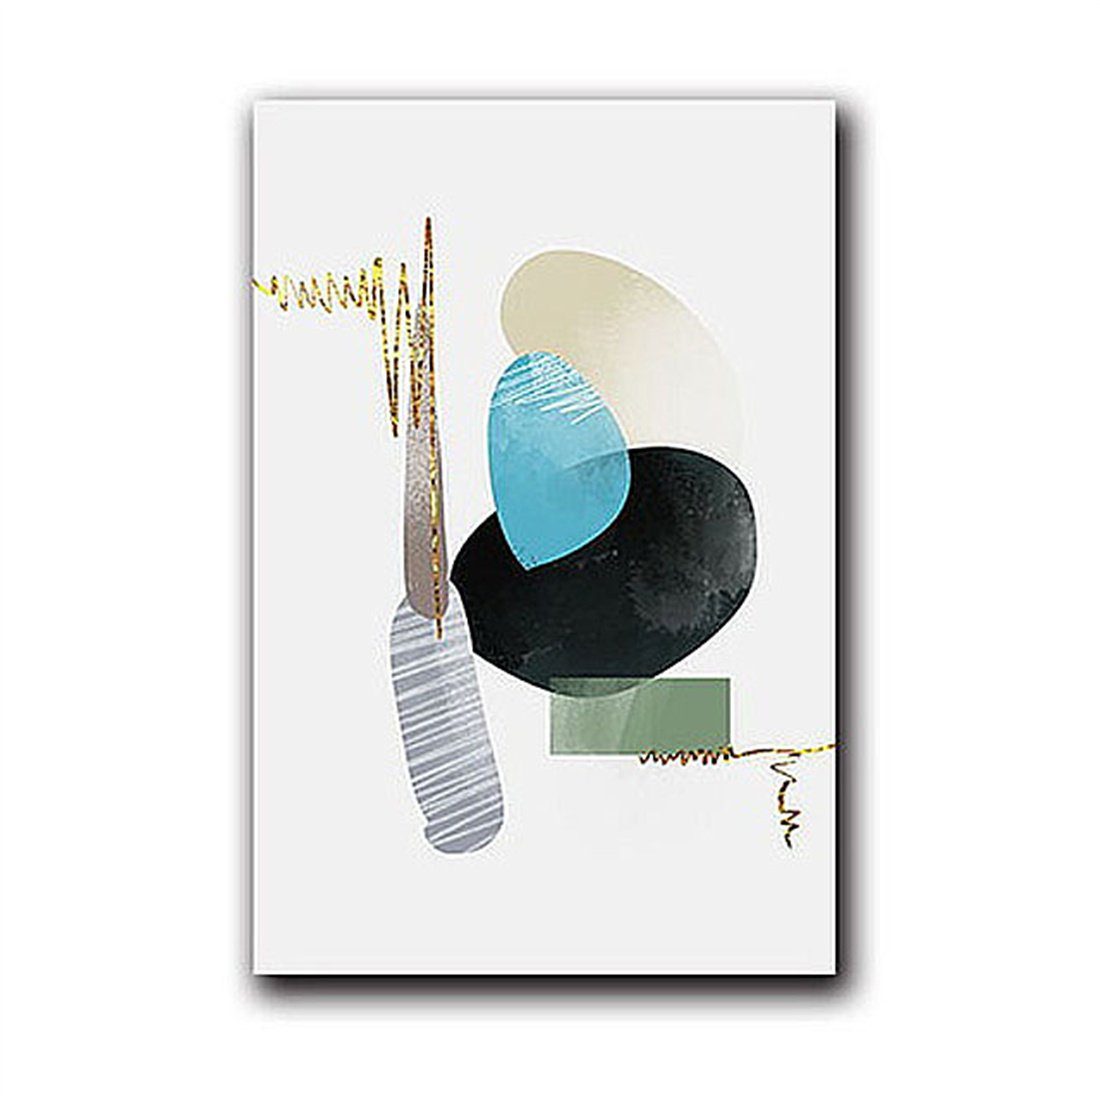 Wandbild HOPPO~ Bildeinsätze,farbenfrohe 3 dekorative Einsätze geometrische ungerahmte